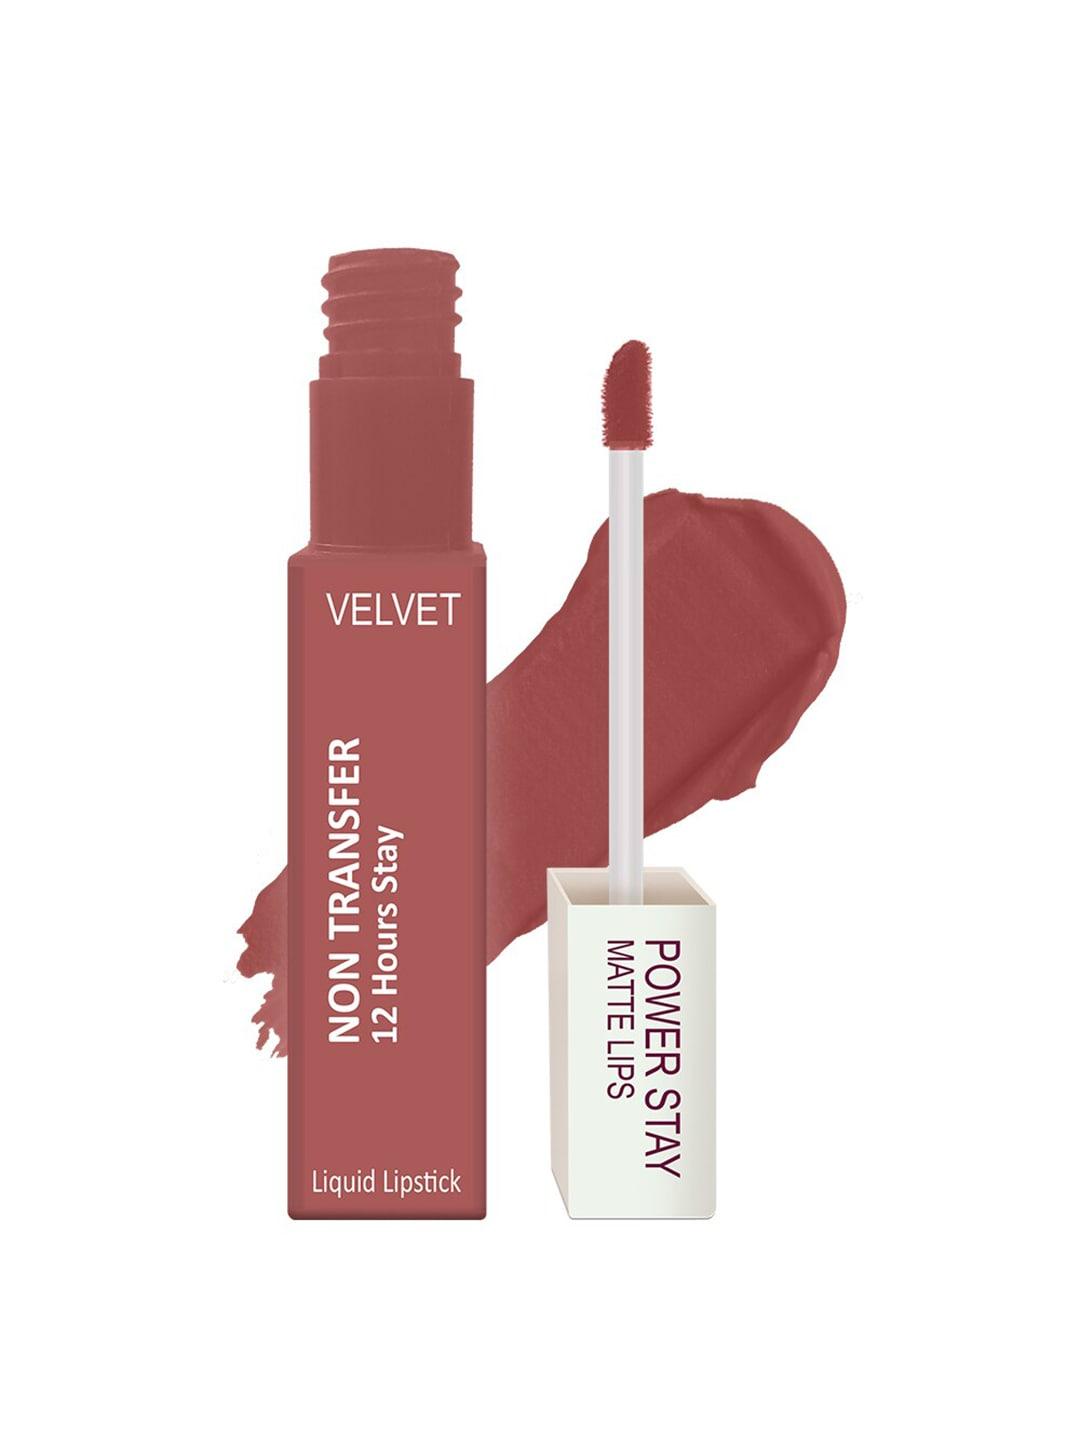 ForSure Waterproof Liquid Matte Lipstick - 5 ml Power Stay-Caramel Nude